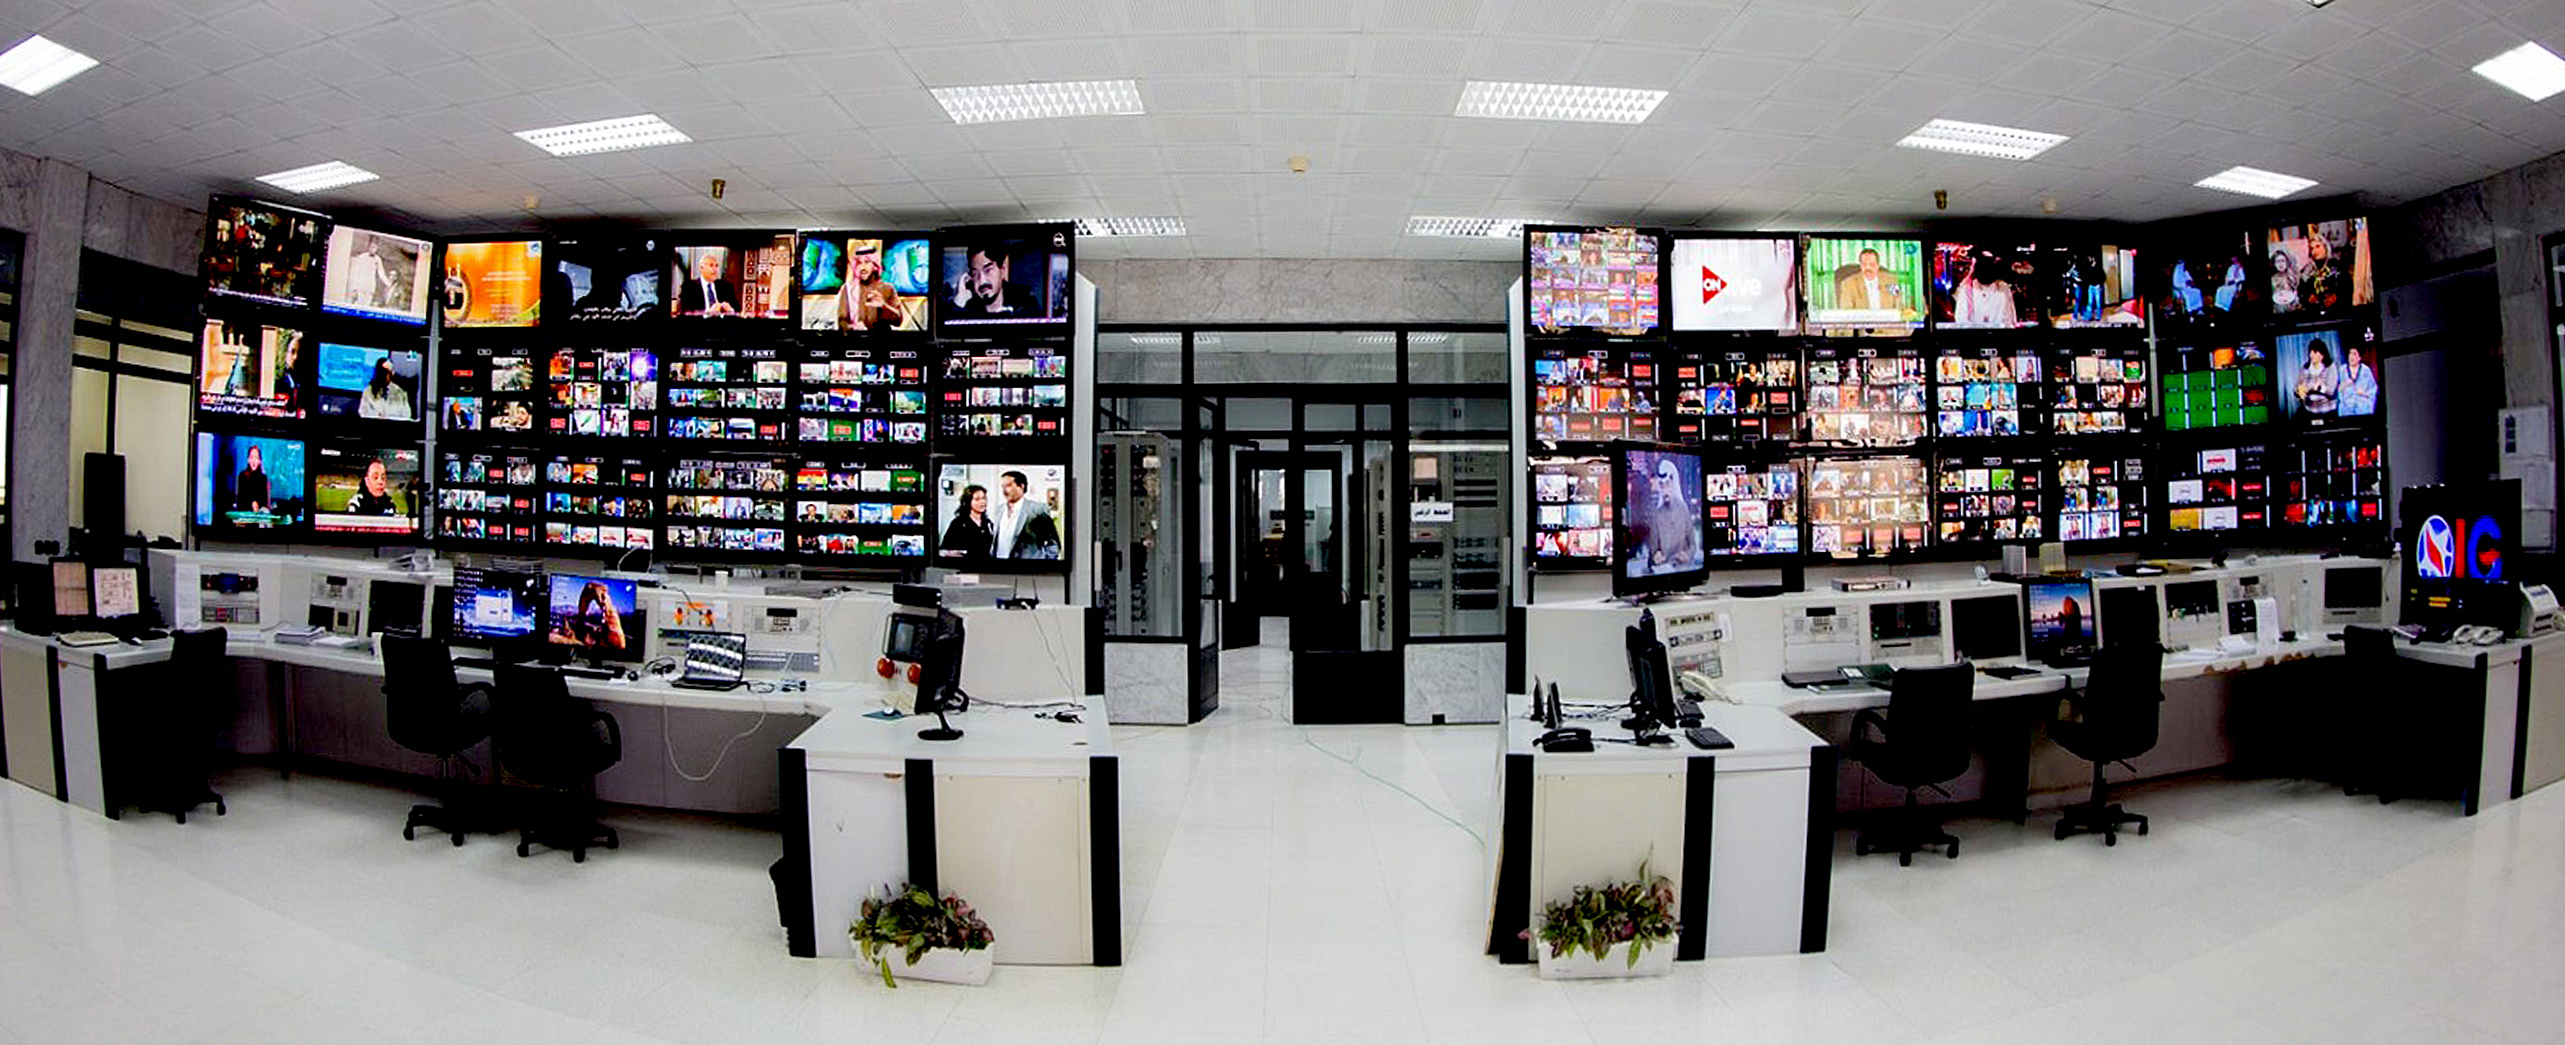 Part of the presentation control suite at Nilesat's Cairo headquarters